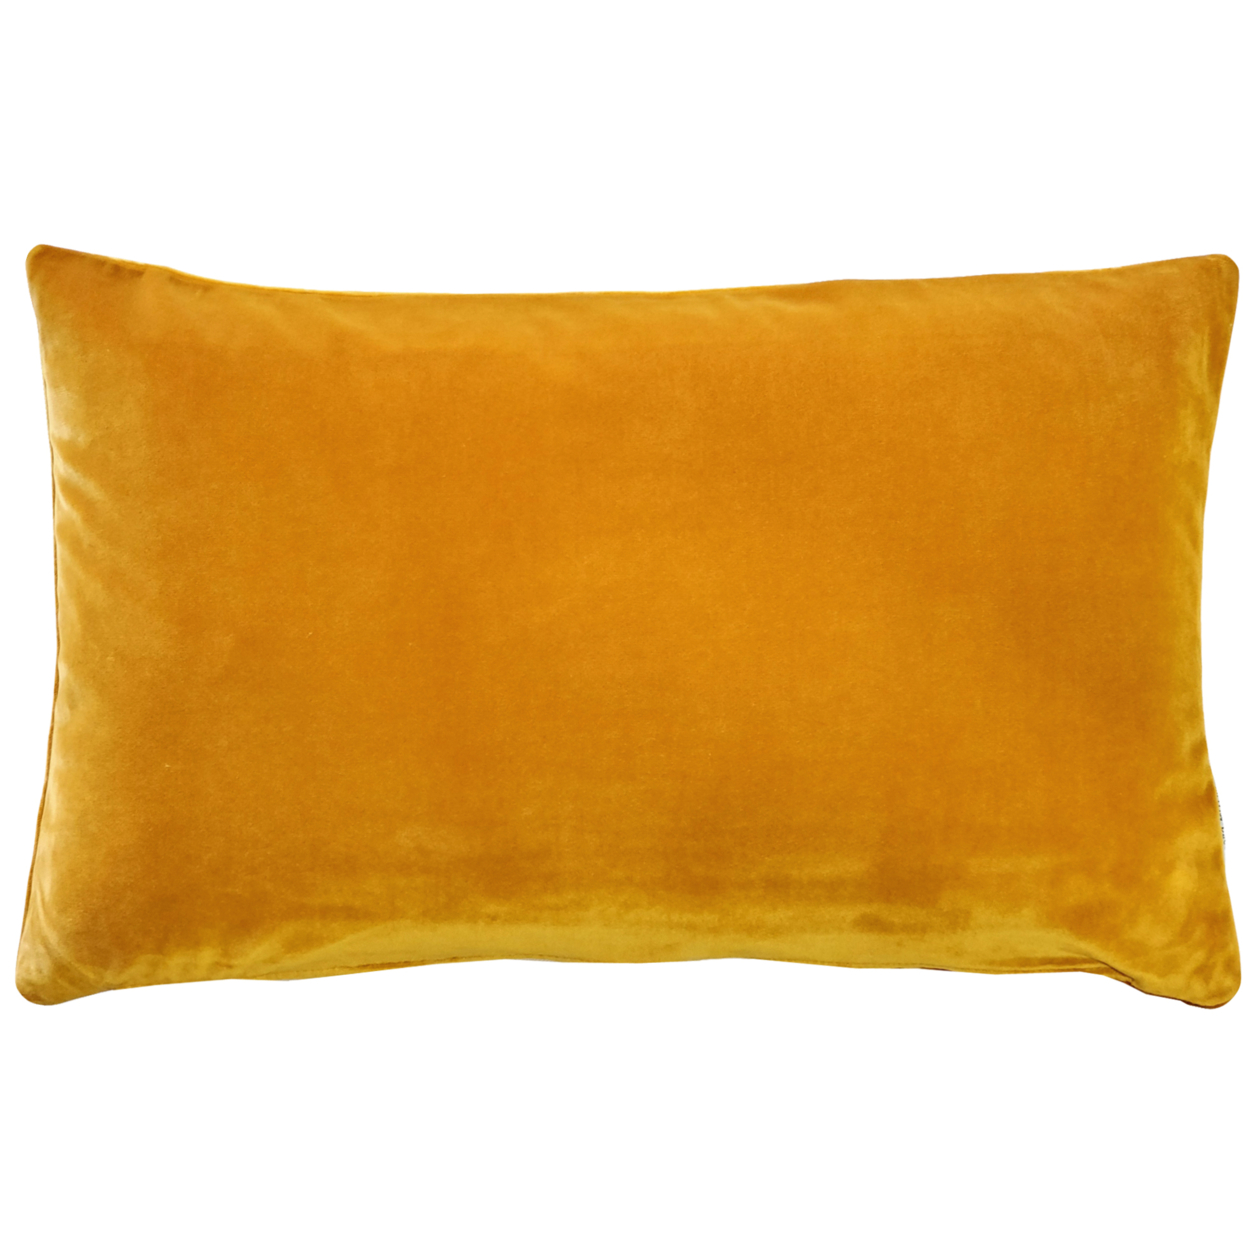 Castello Velvet Throw Pillows, Complete Pillow With Polyfill Pillow Insert (18 Colors, 3 Sizes) - Deep Yellow, 12x20